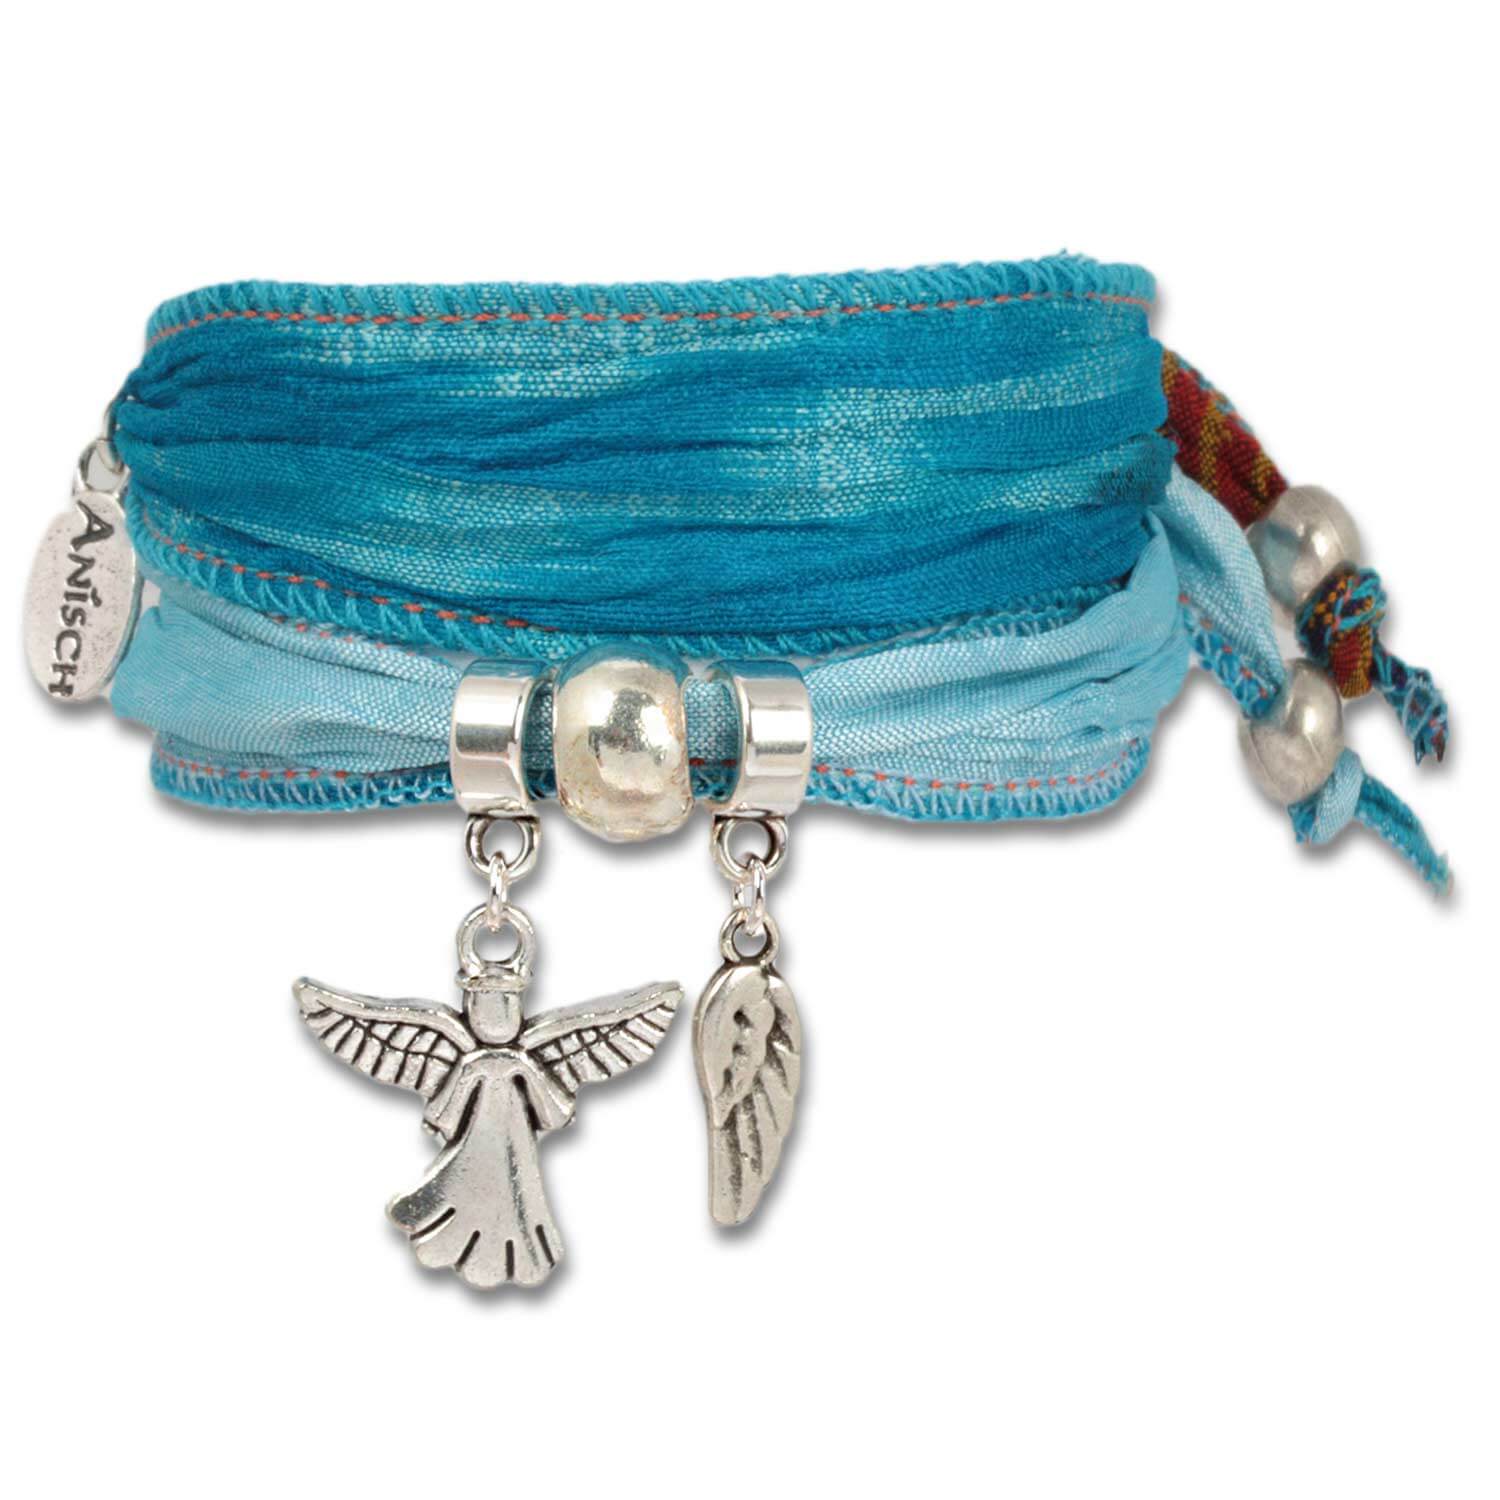 Princess Blue - Wings of Hope bracelet from indian saris